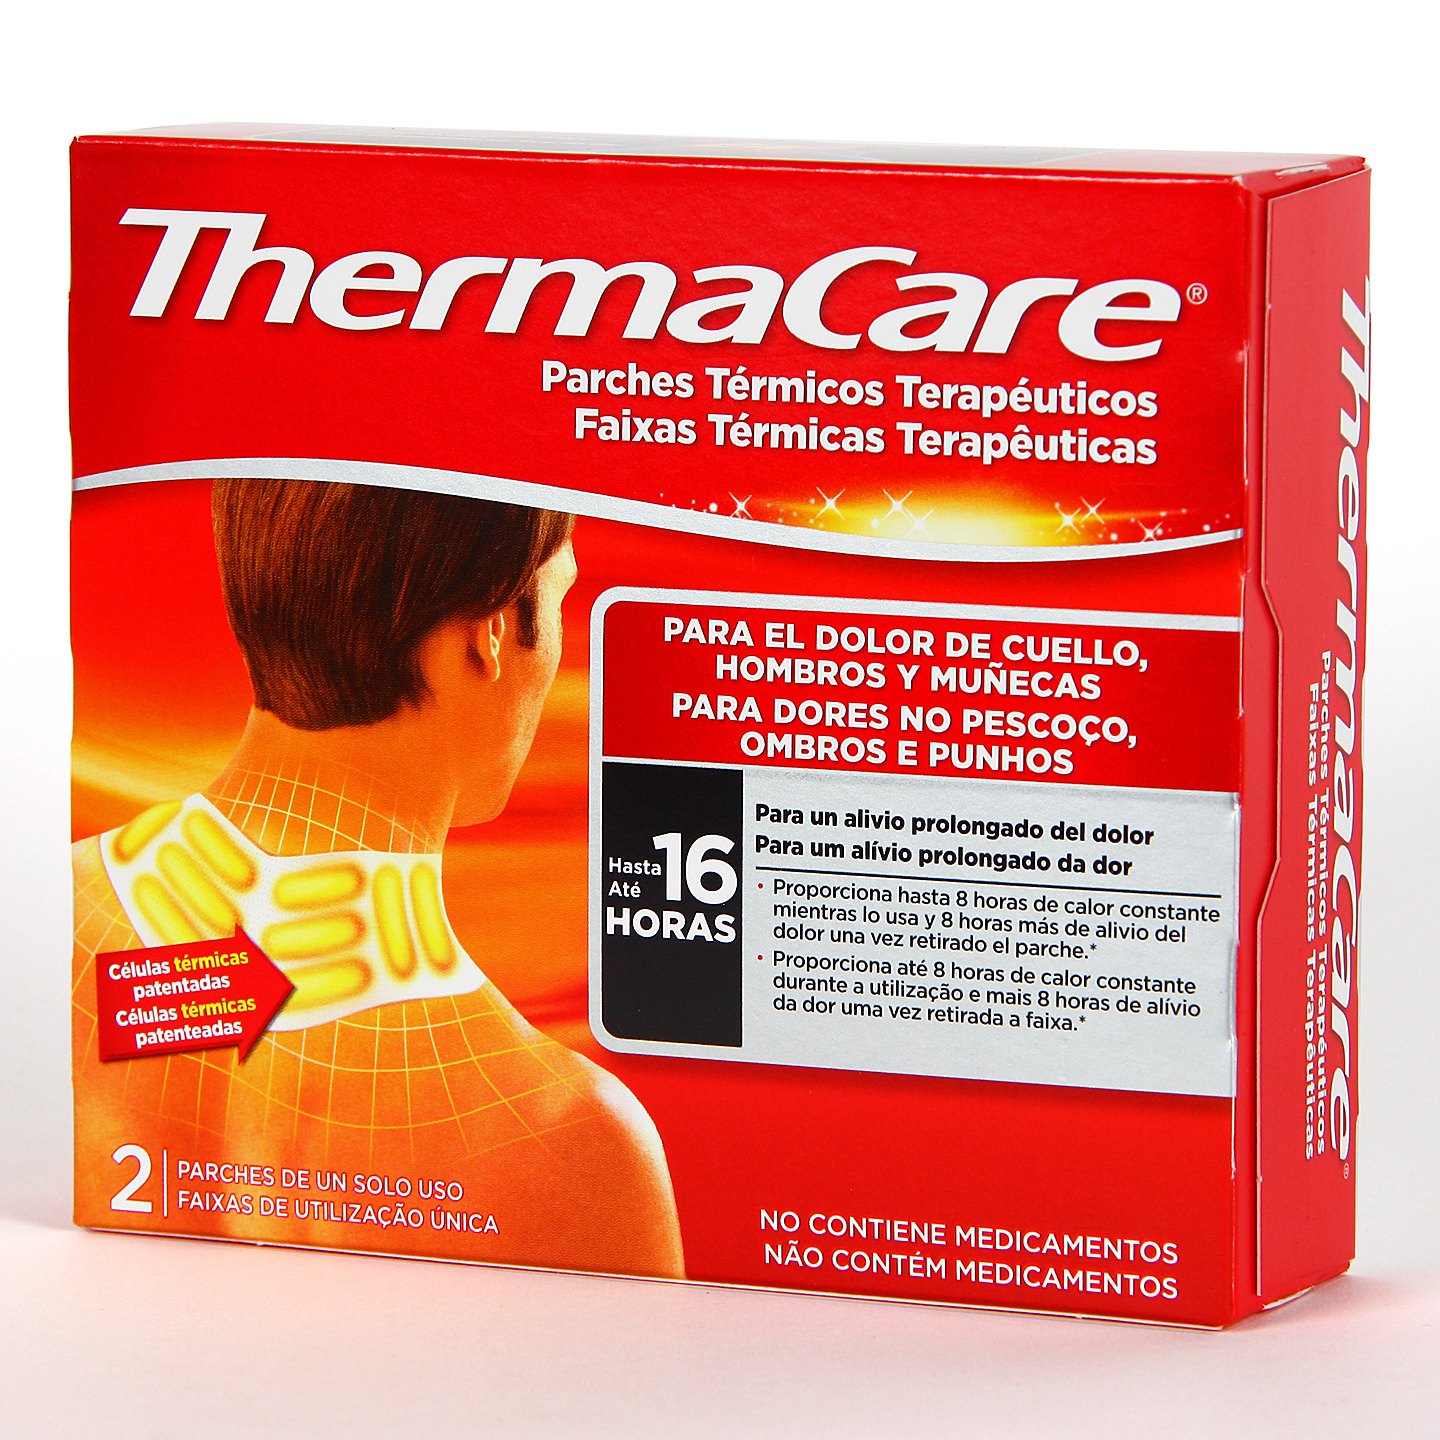 https://farmaciajimenez.com/storage/products/thermacare-cuello-y-hombro-2-parches/thermacare-dolor-cuello-hombros-y-munecas-2-parches-1440.jpg